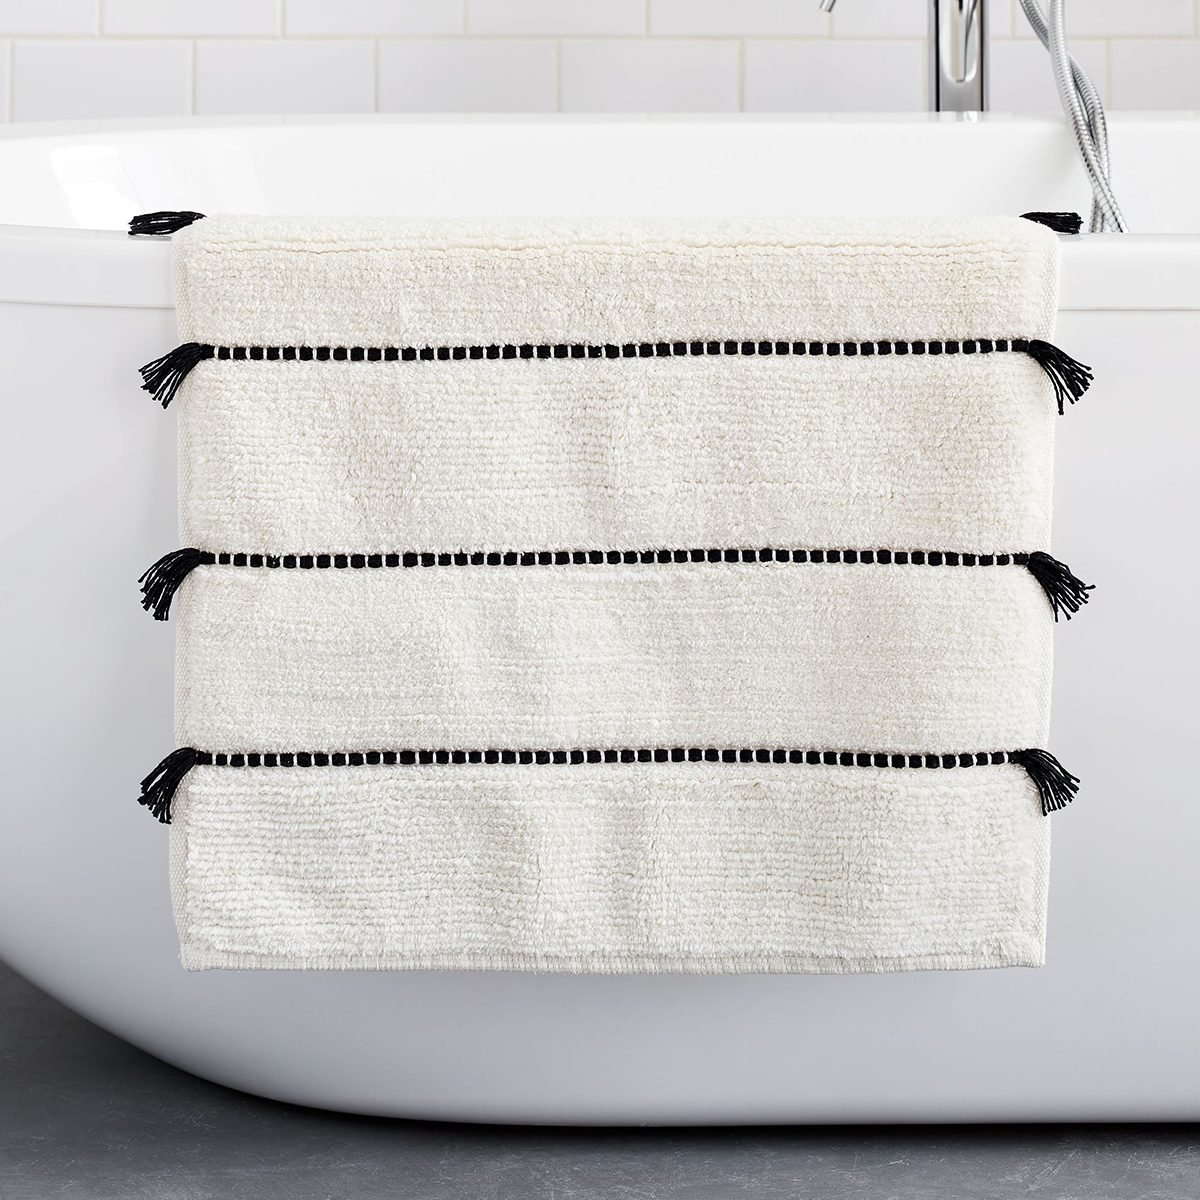 Kindred Organic Cotton Tawny Bath Mat 24x36 + Reviews